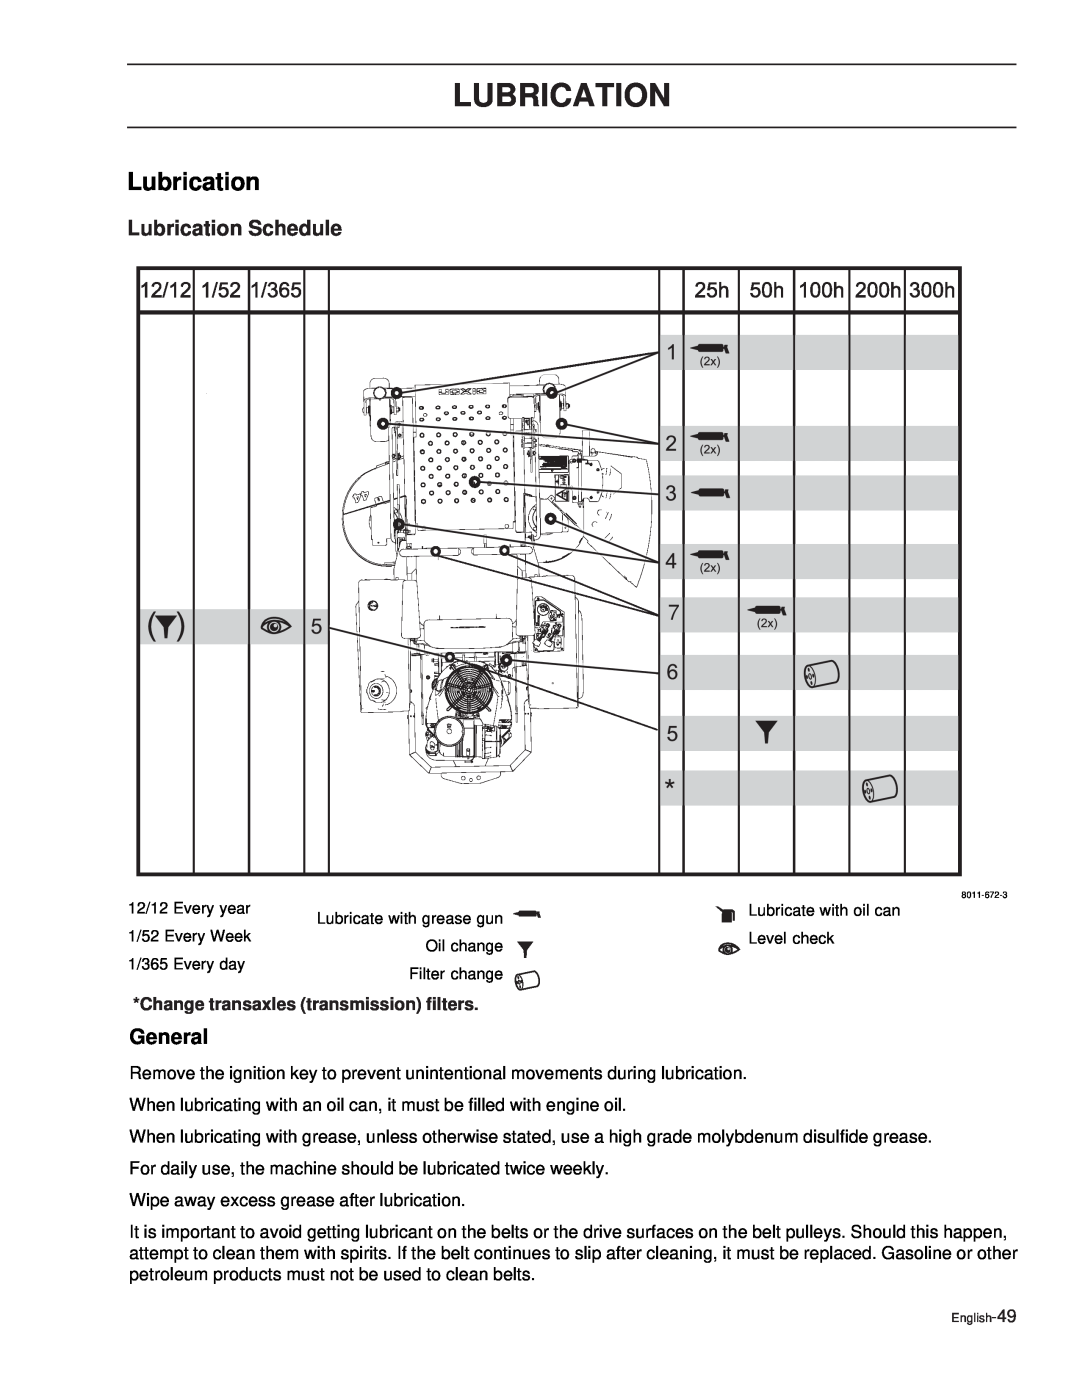 Dixon 44 / 968999538, 44 / 968999611 manual Lubrication Schedule, General, Change transaxles transmission filters 